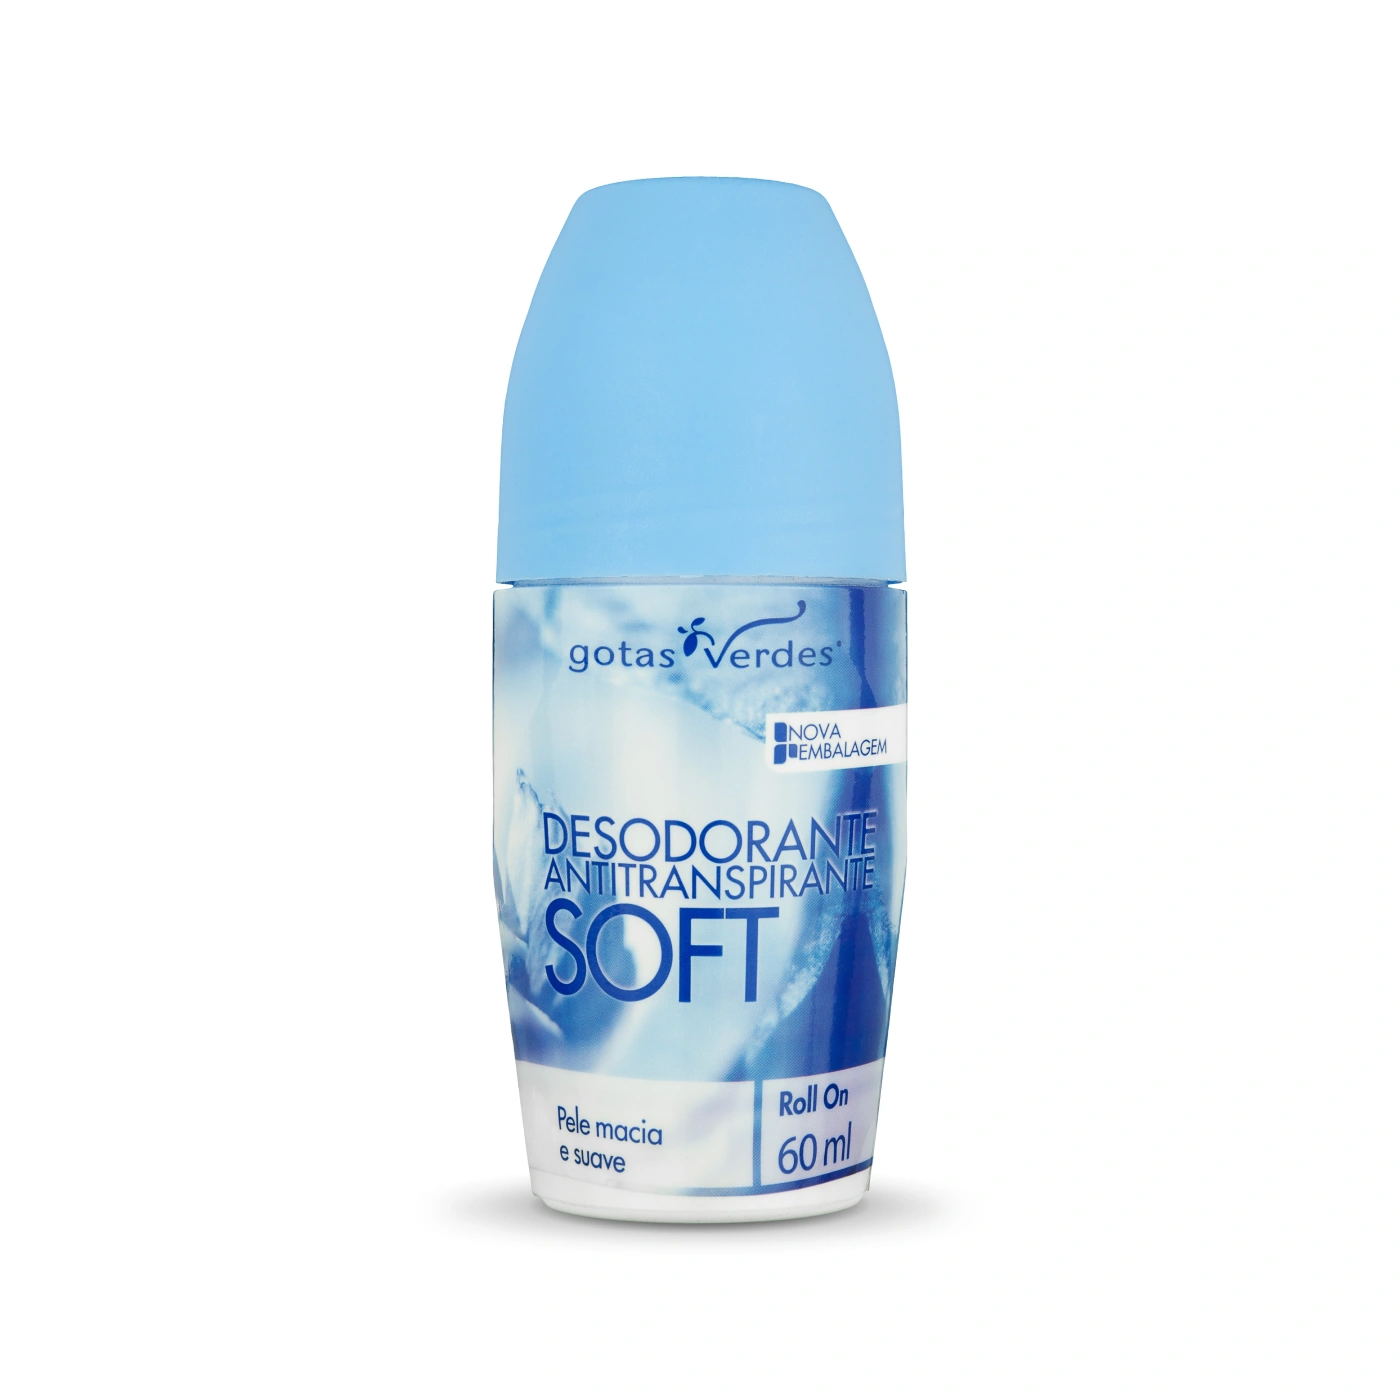 Desodorante Antitranspirante Soft